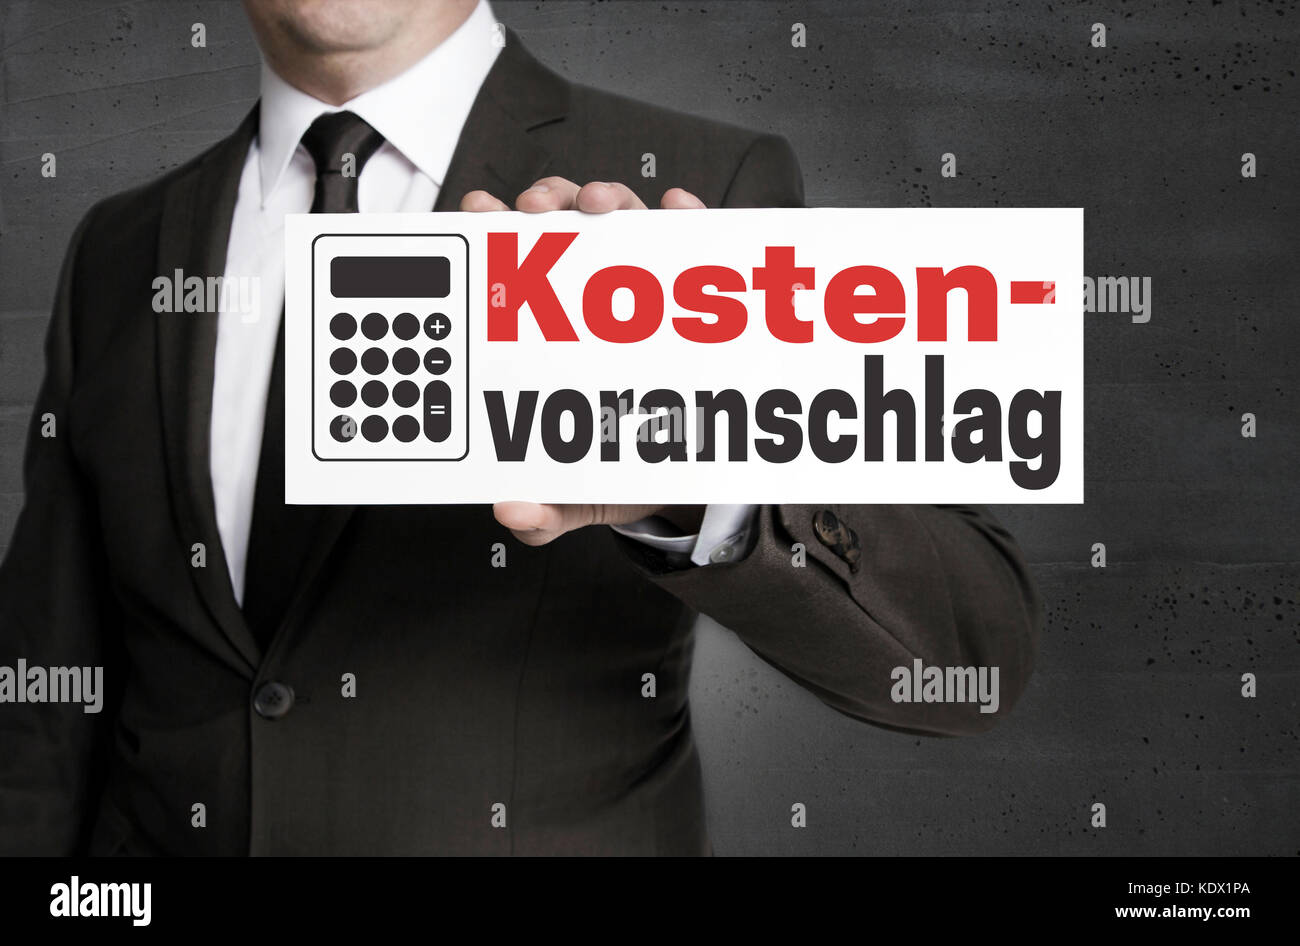 Kostenvoranschlag (in german Cost estimate) signboard is held by businessman. Stock Photo